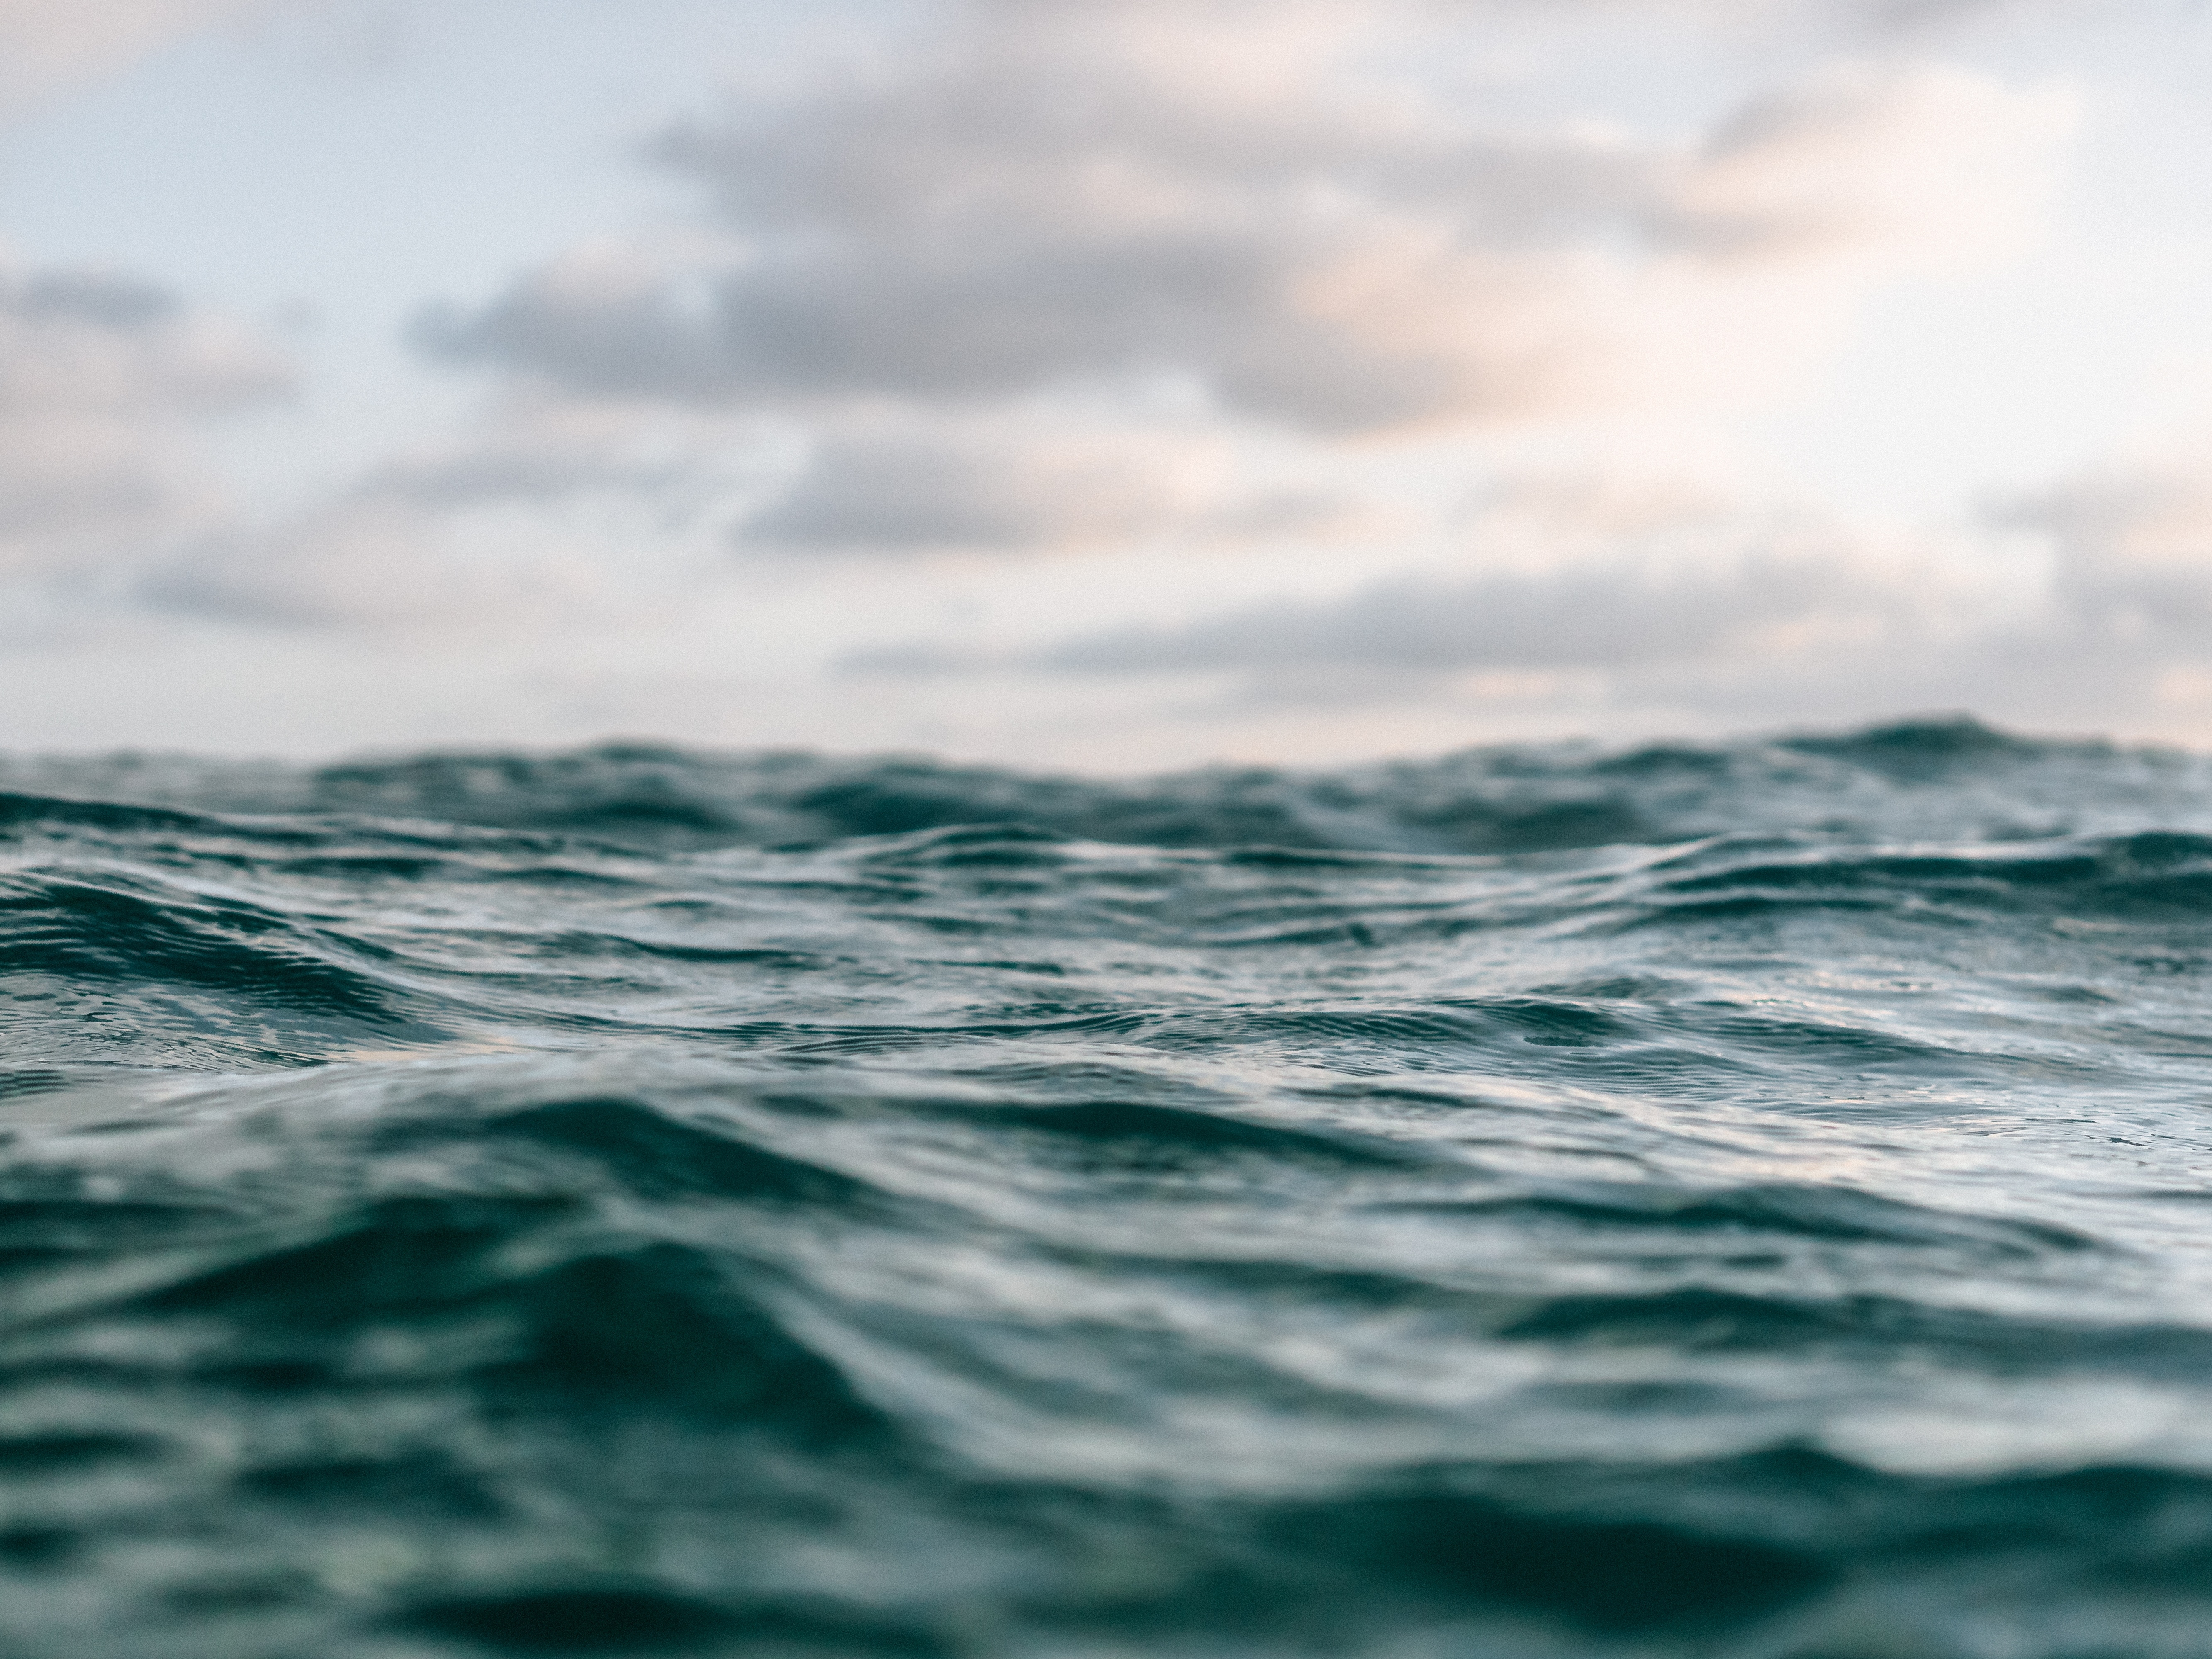 A ripple on the sea surface